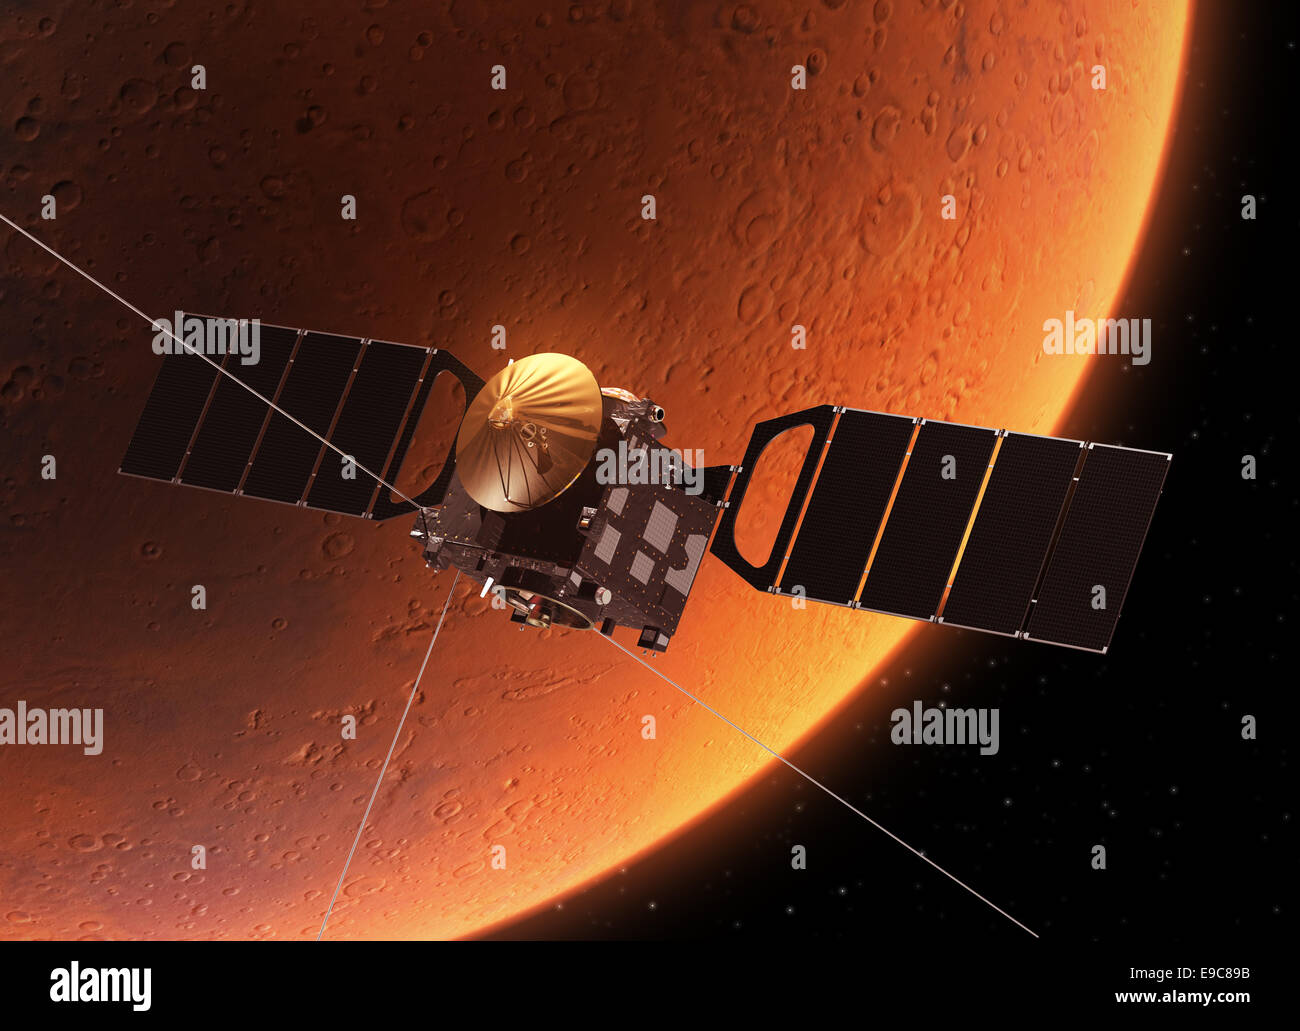 Spacecraft Orbiting Planet Mars. Realistic 3D Scene. Stock Photo